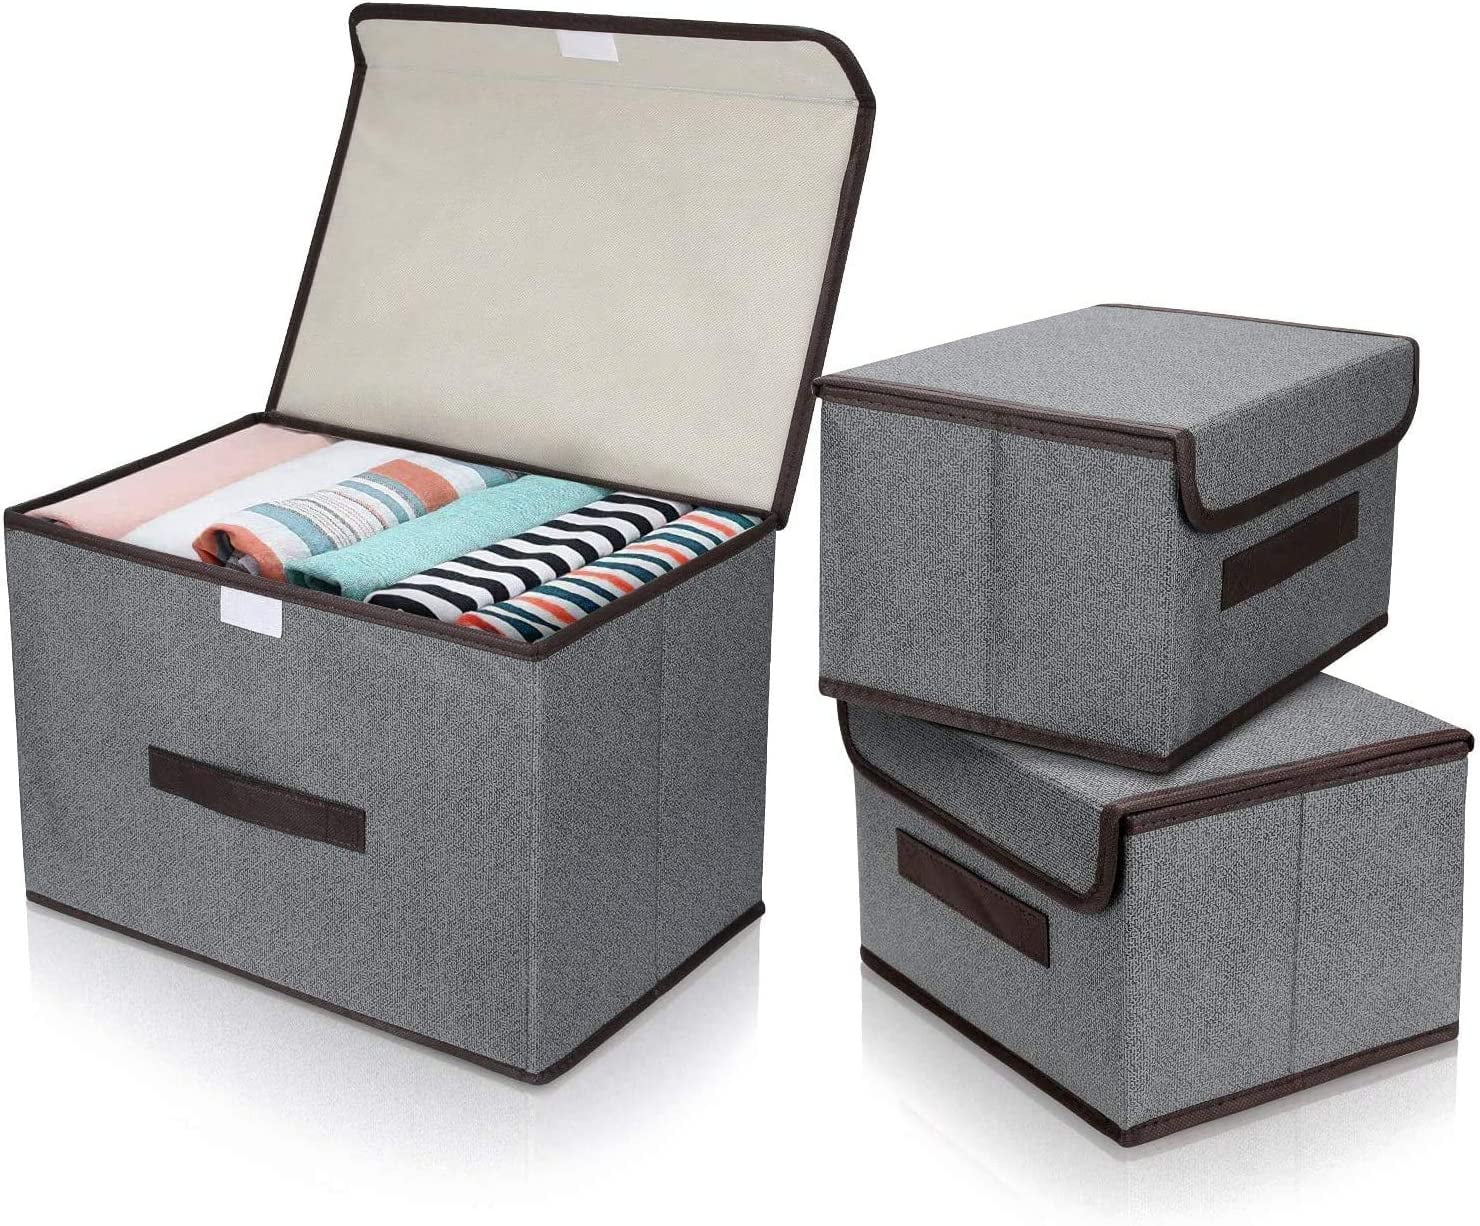 Taqqpue Foldable Storage Box With Lid 2pcs (large + Small) Fabric Storage  Box With Lid Closet Storage Box Room Organization Office Storage Toy  Storage